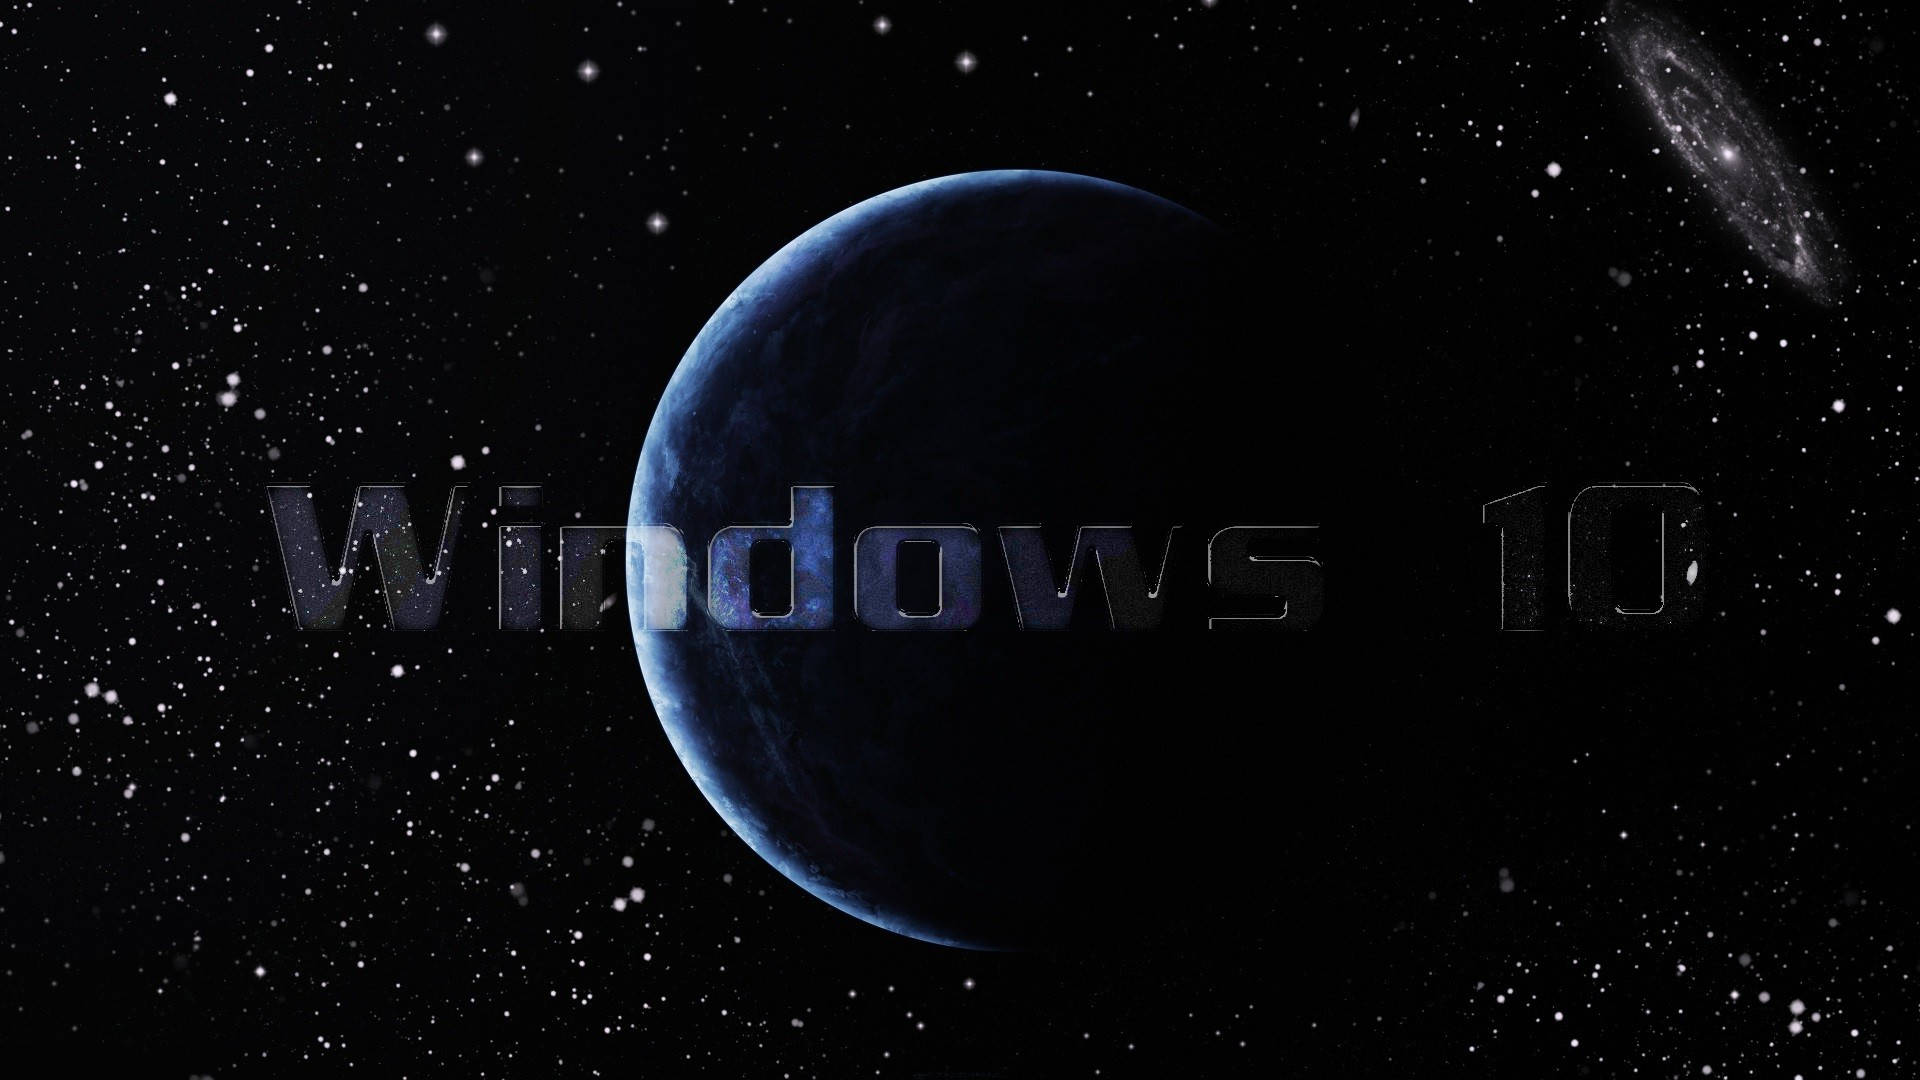 Black Windows 10 Hd Space Wallpaper